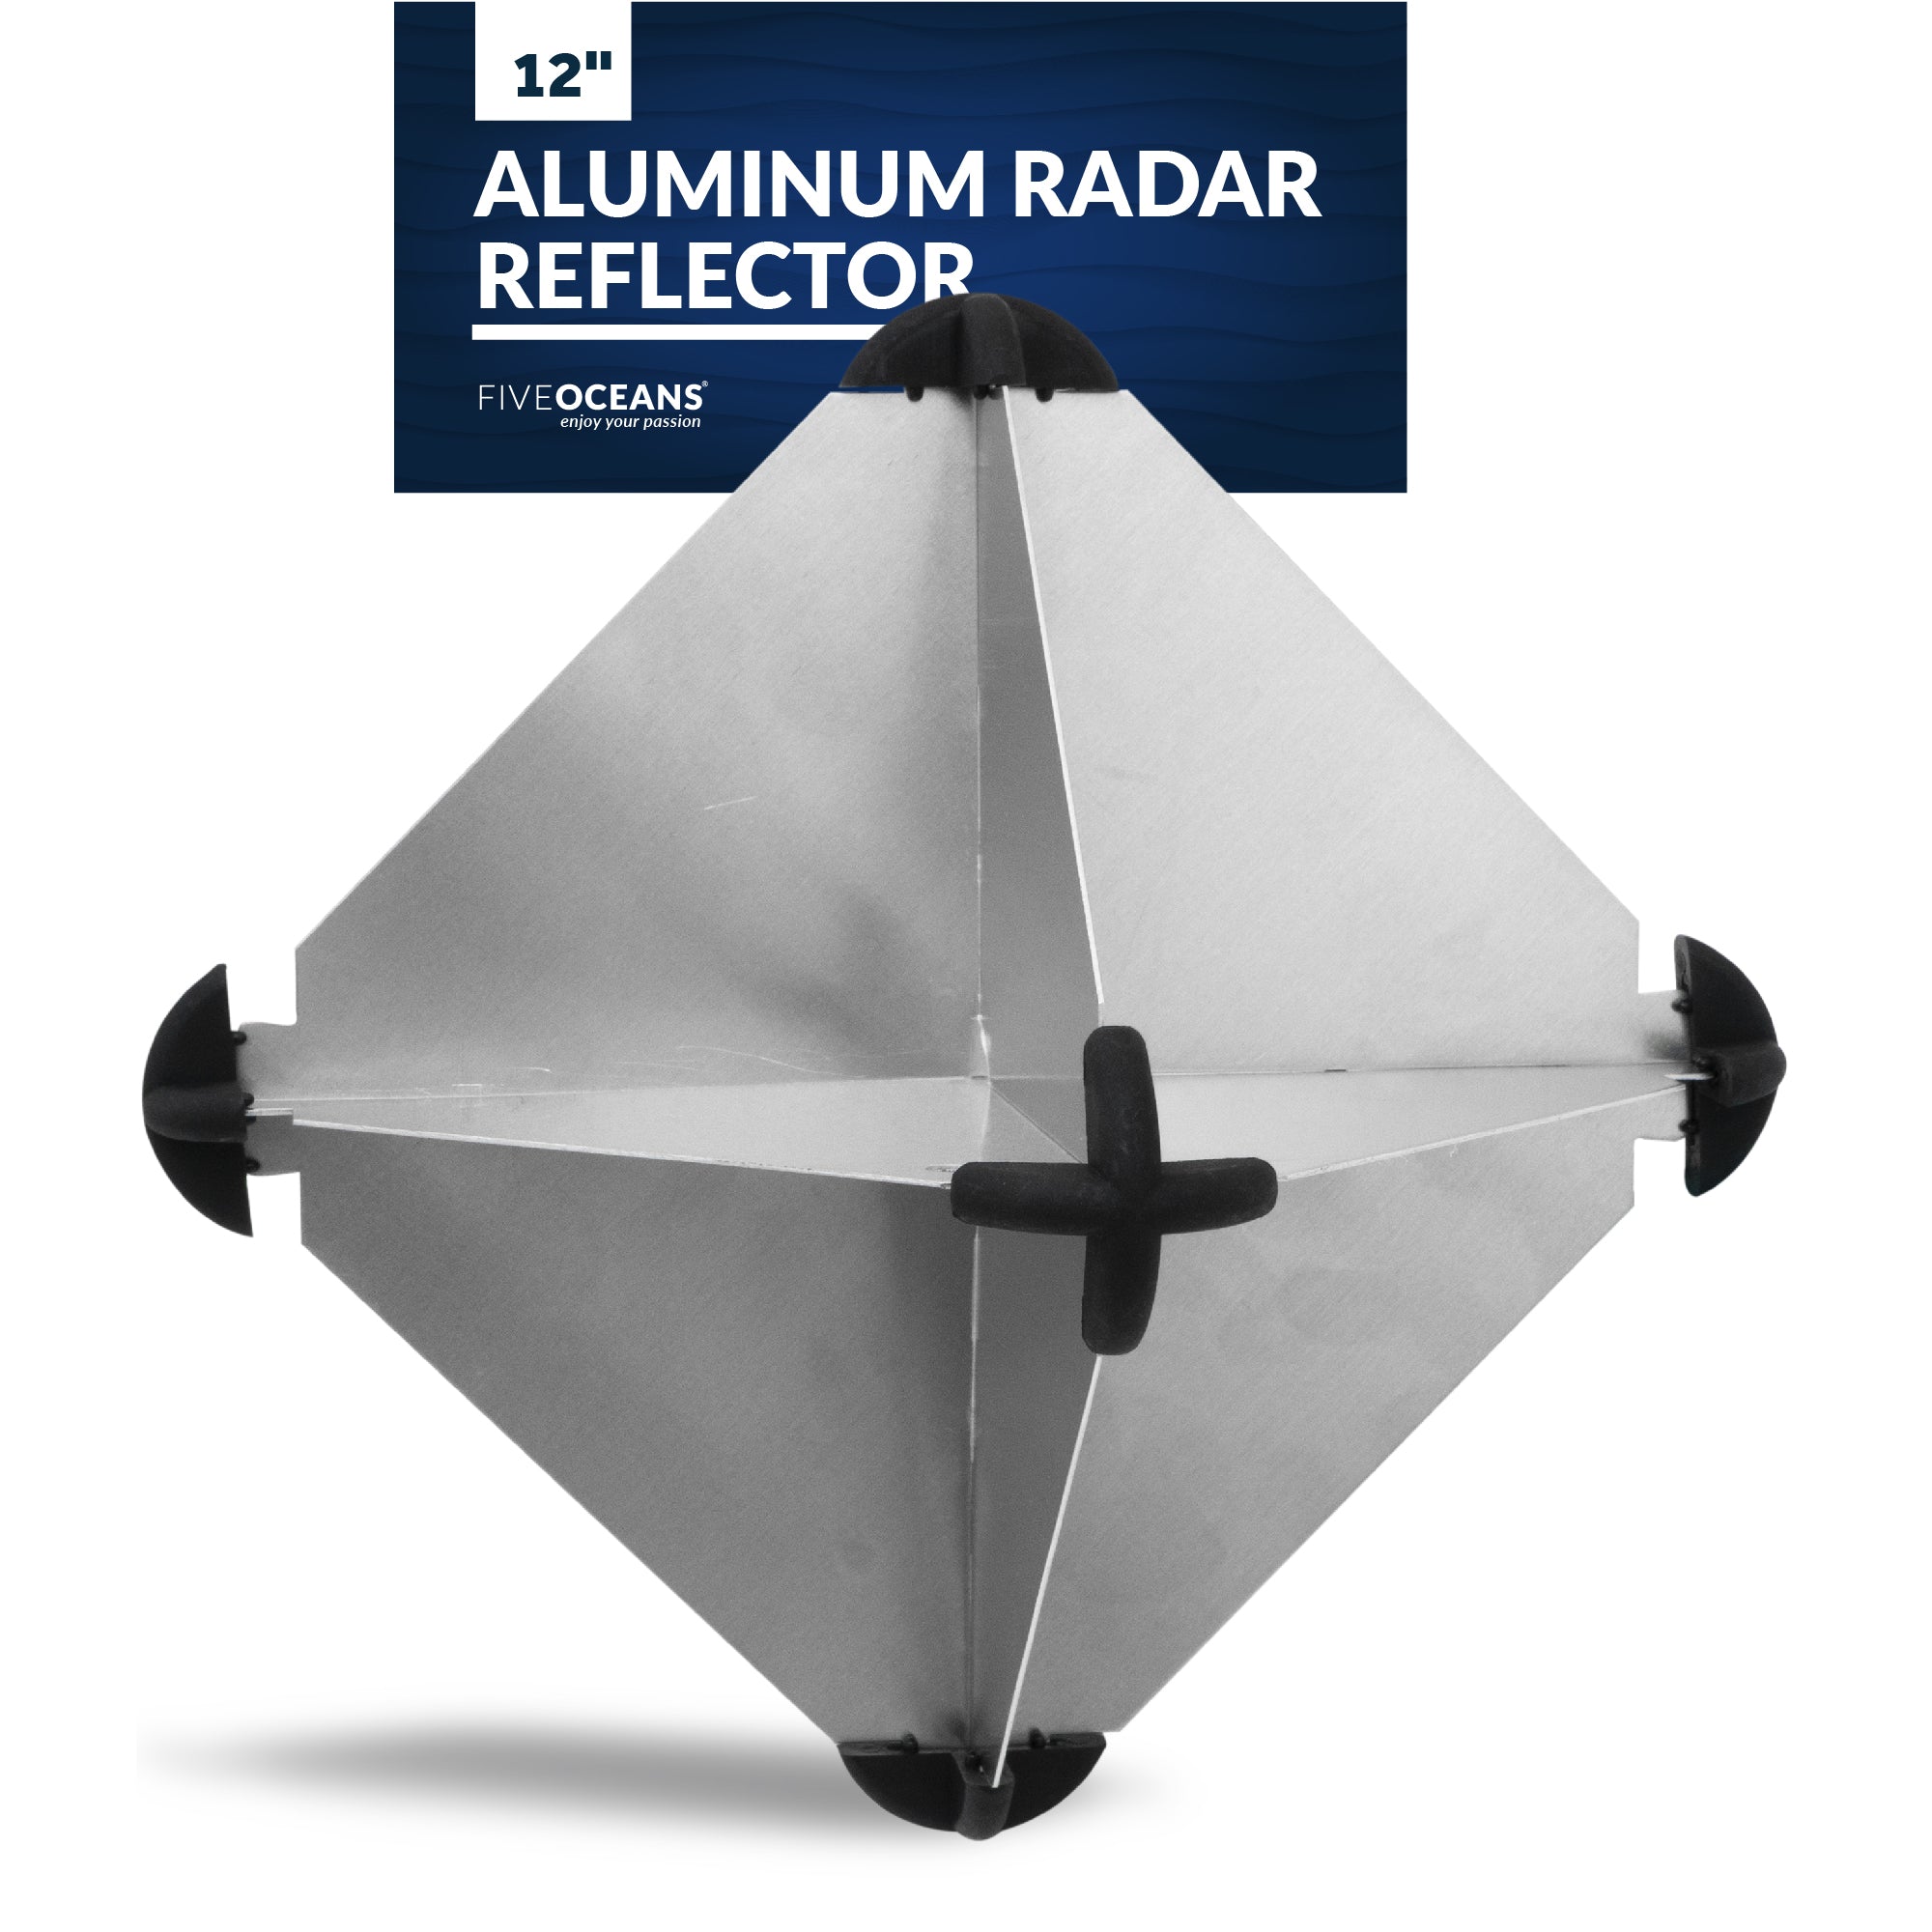 Aluminum Radar Reflector for Boats, 12" - FO2316